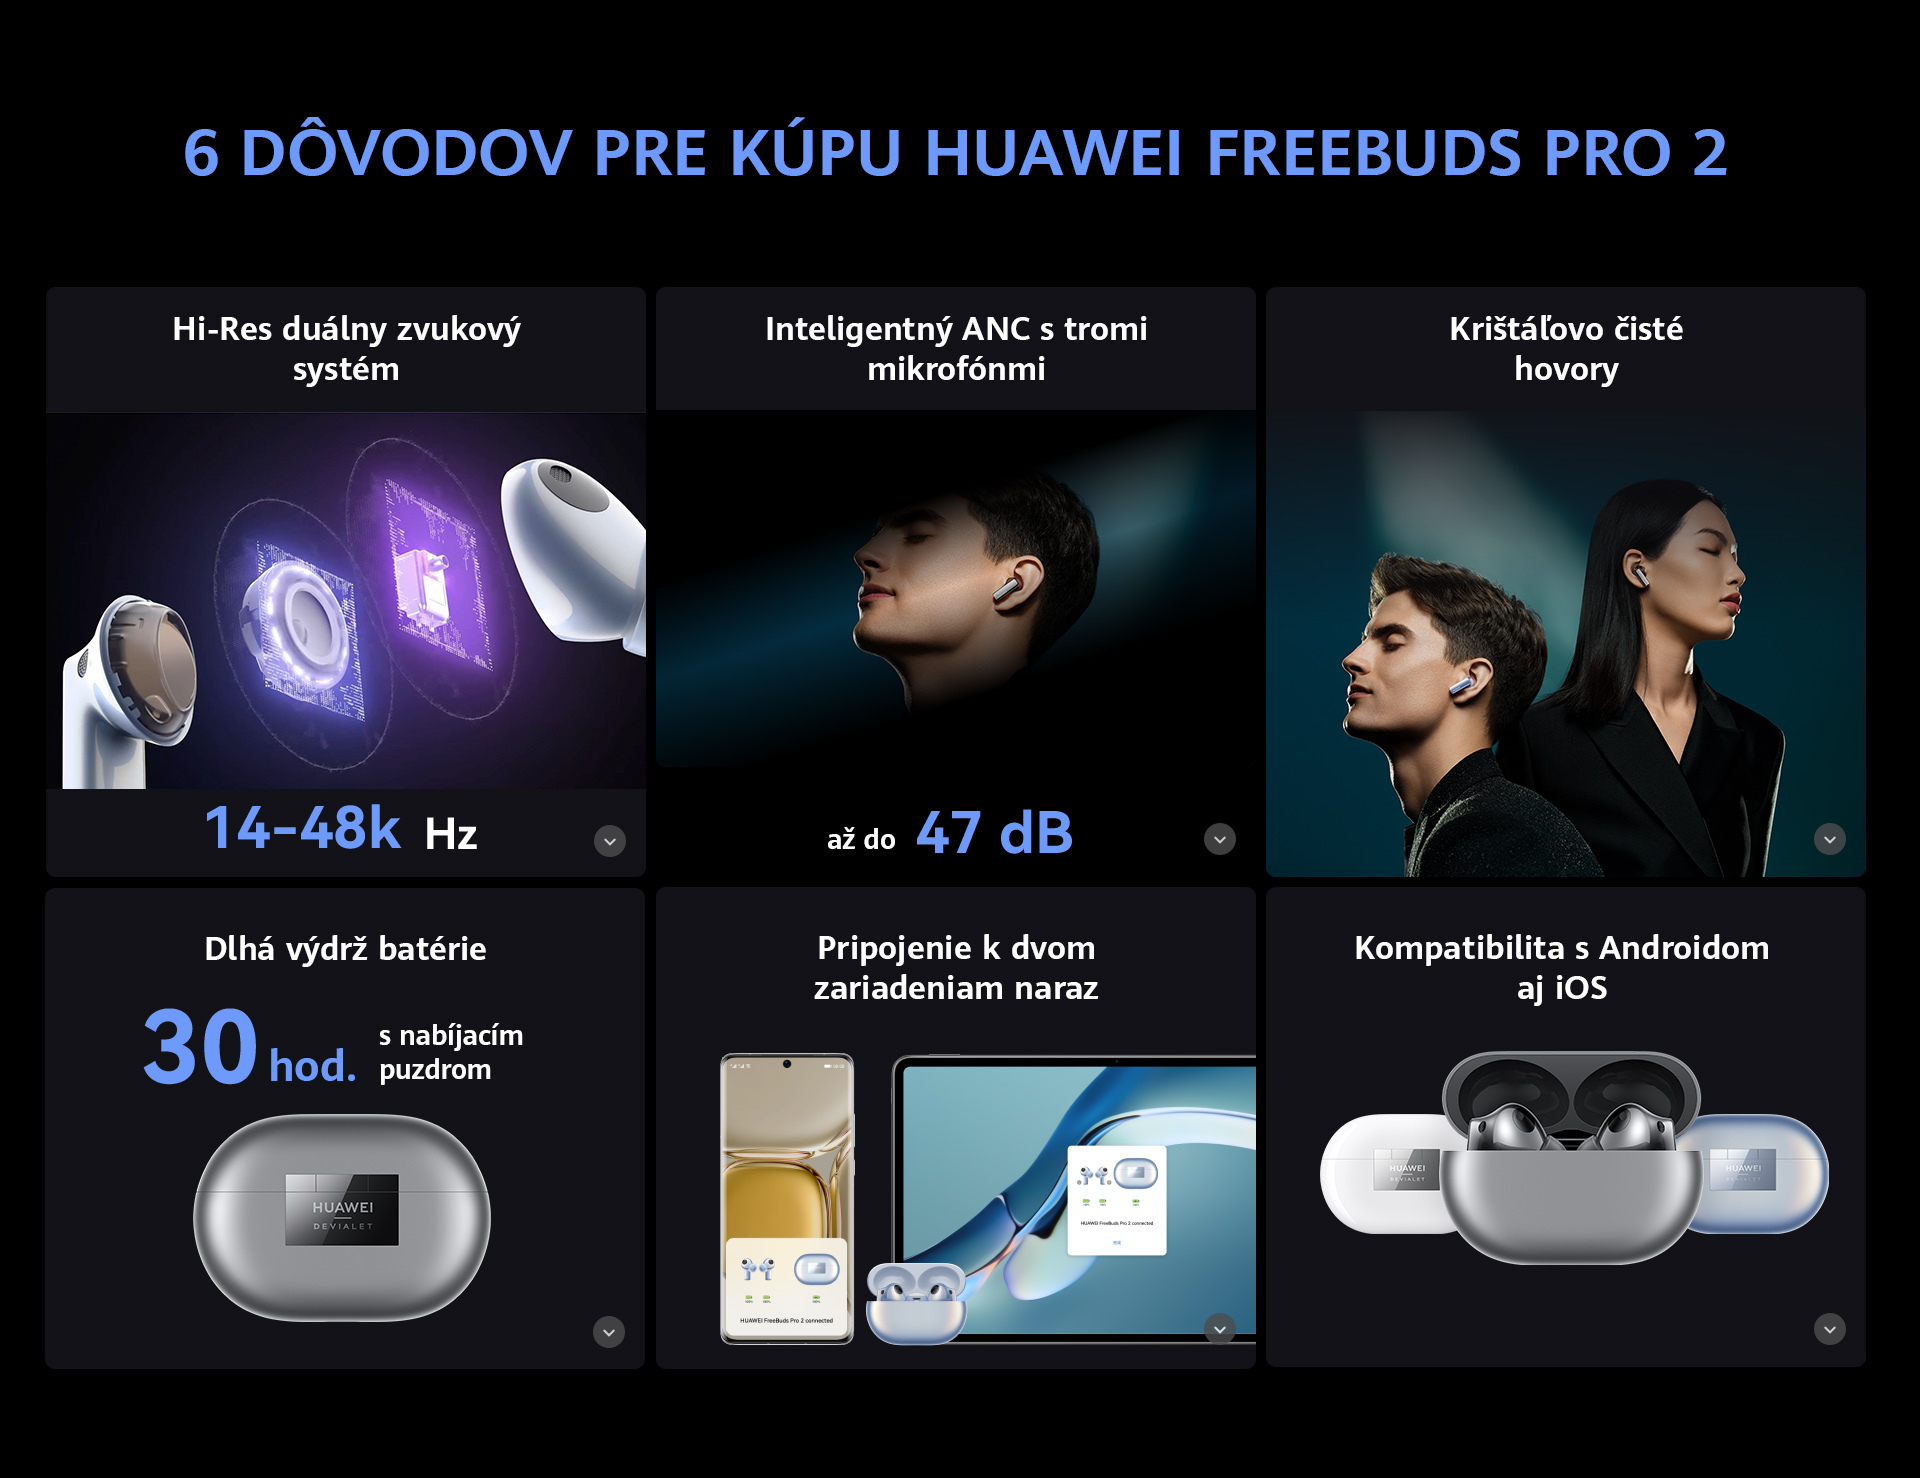 Huawei freebuds pro сравнение. Huawei freebuds Pro 2 Silver. Huawei freebuds Pro 2 и Huawei freebuds Pro. Huawei freebuds Pro 2 Review. Freebuds Pro 2 Дата выхода.